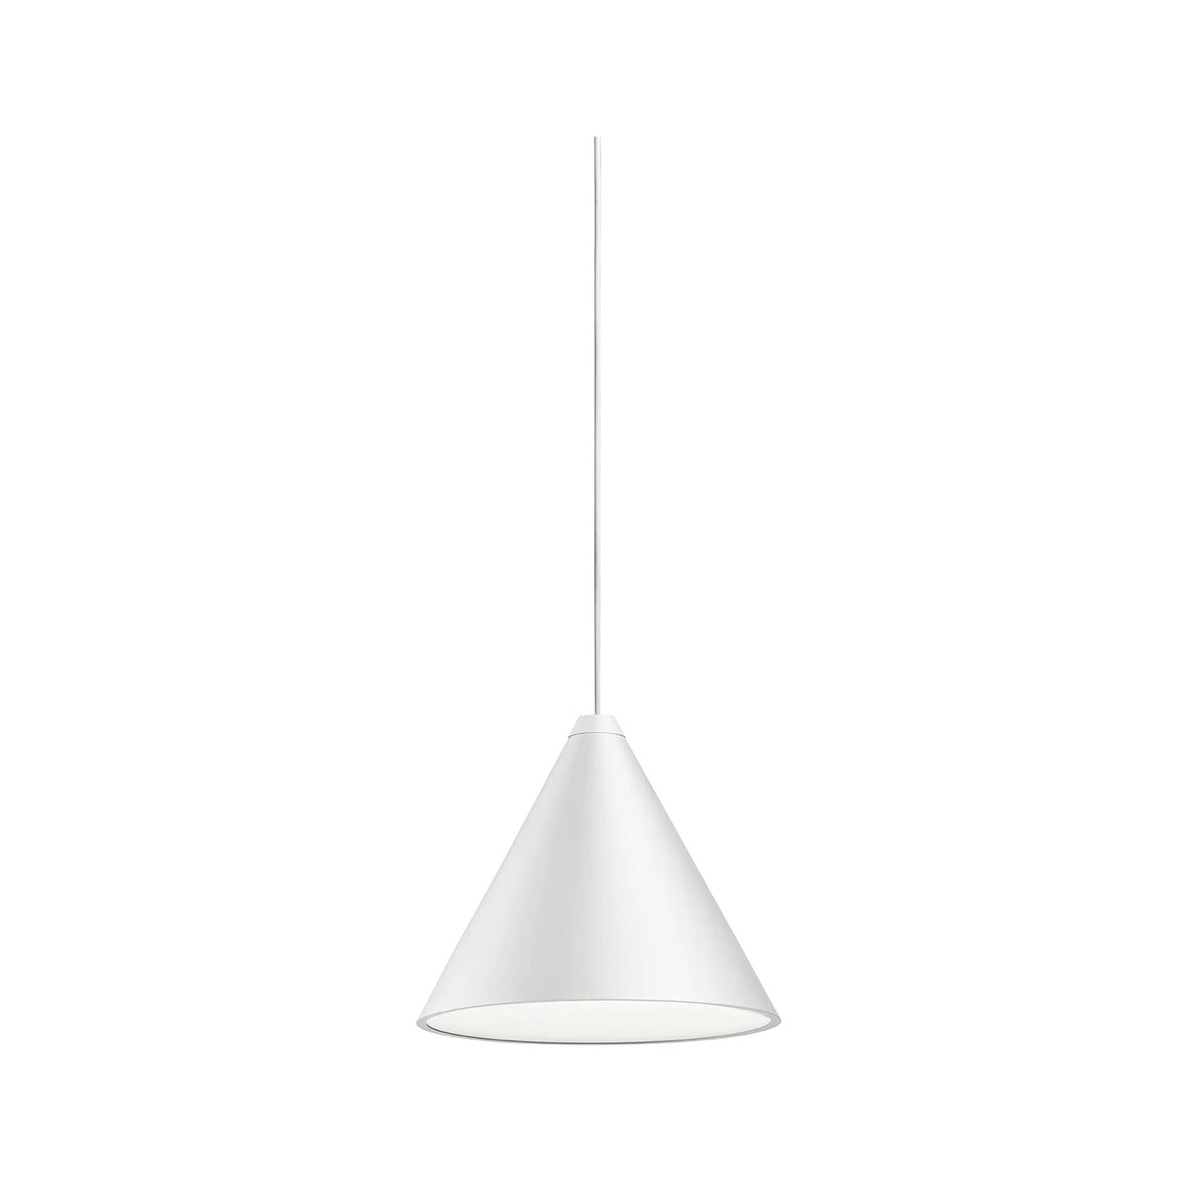 white cone - app control - String Light